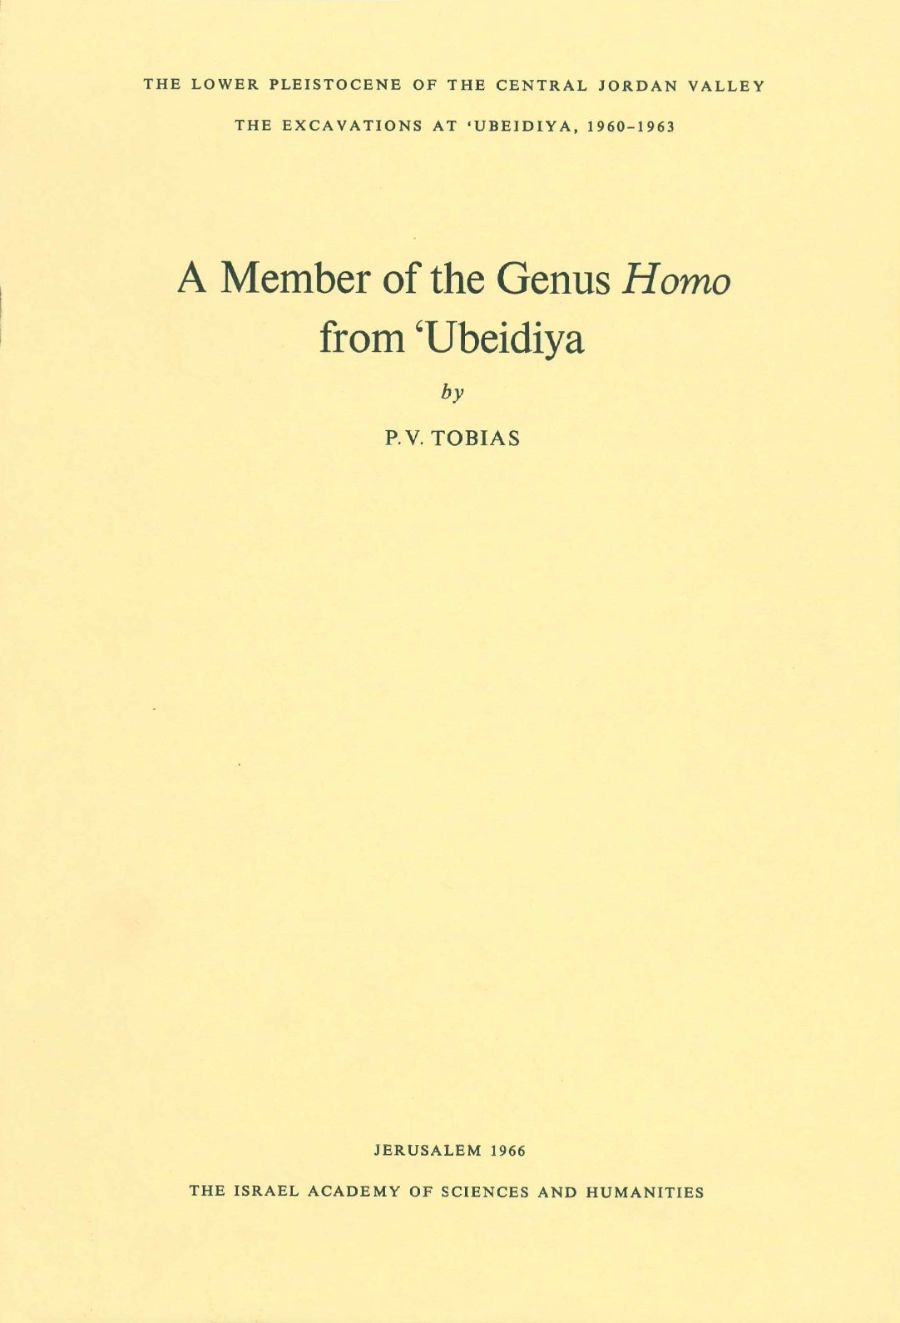 A Member of the Genus Homo from ‘Ubeidiya